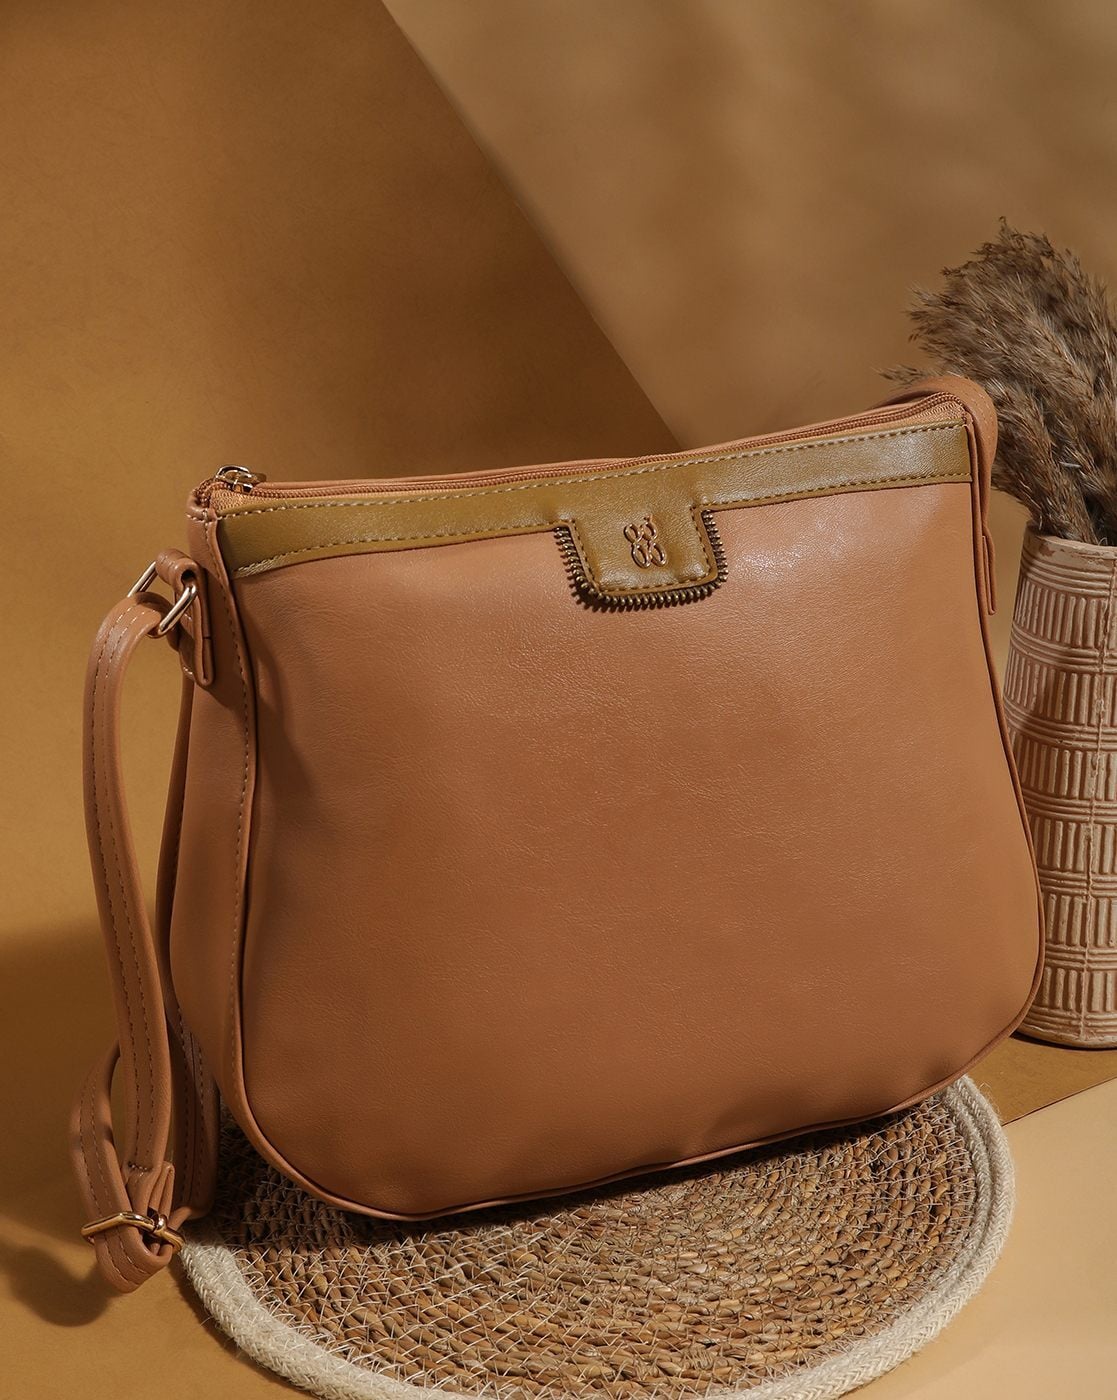 Buy women's latest and Stylish handbags. Buy Online